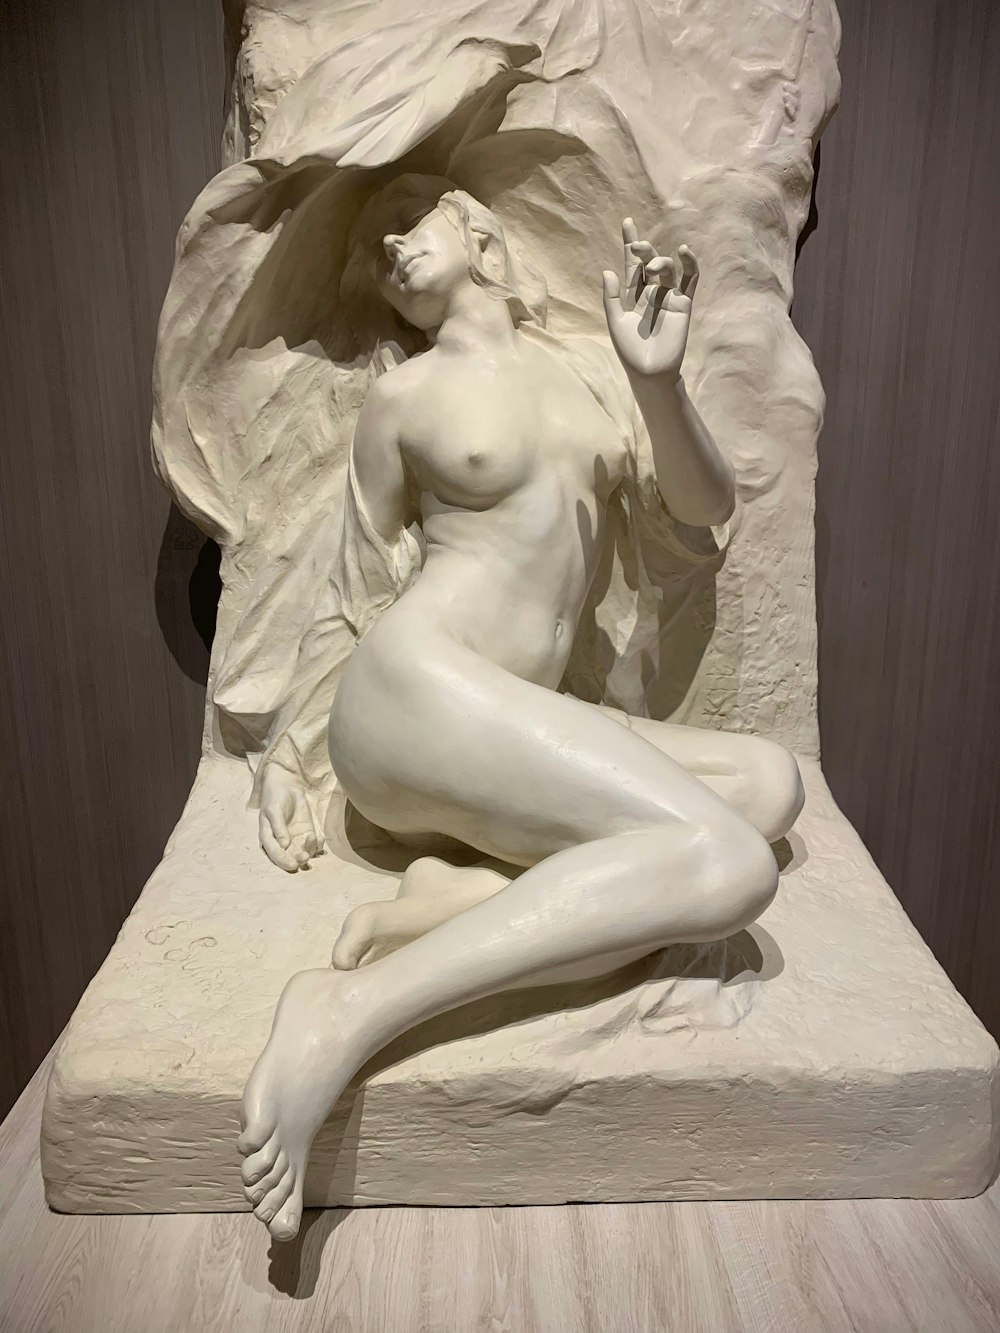 White nude woman sculpture photo – Free Statue Image on Unsplash